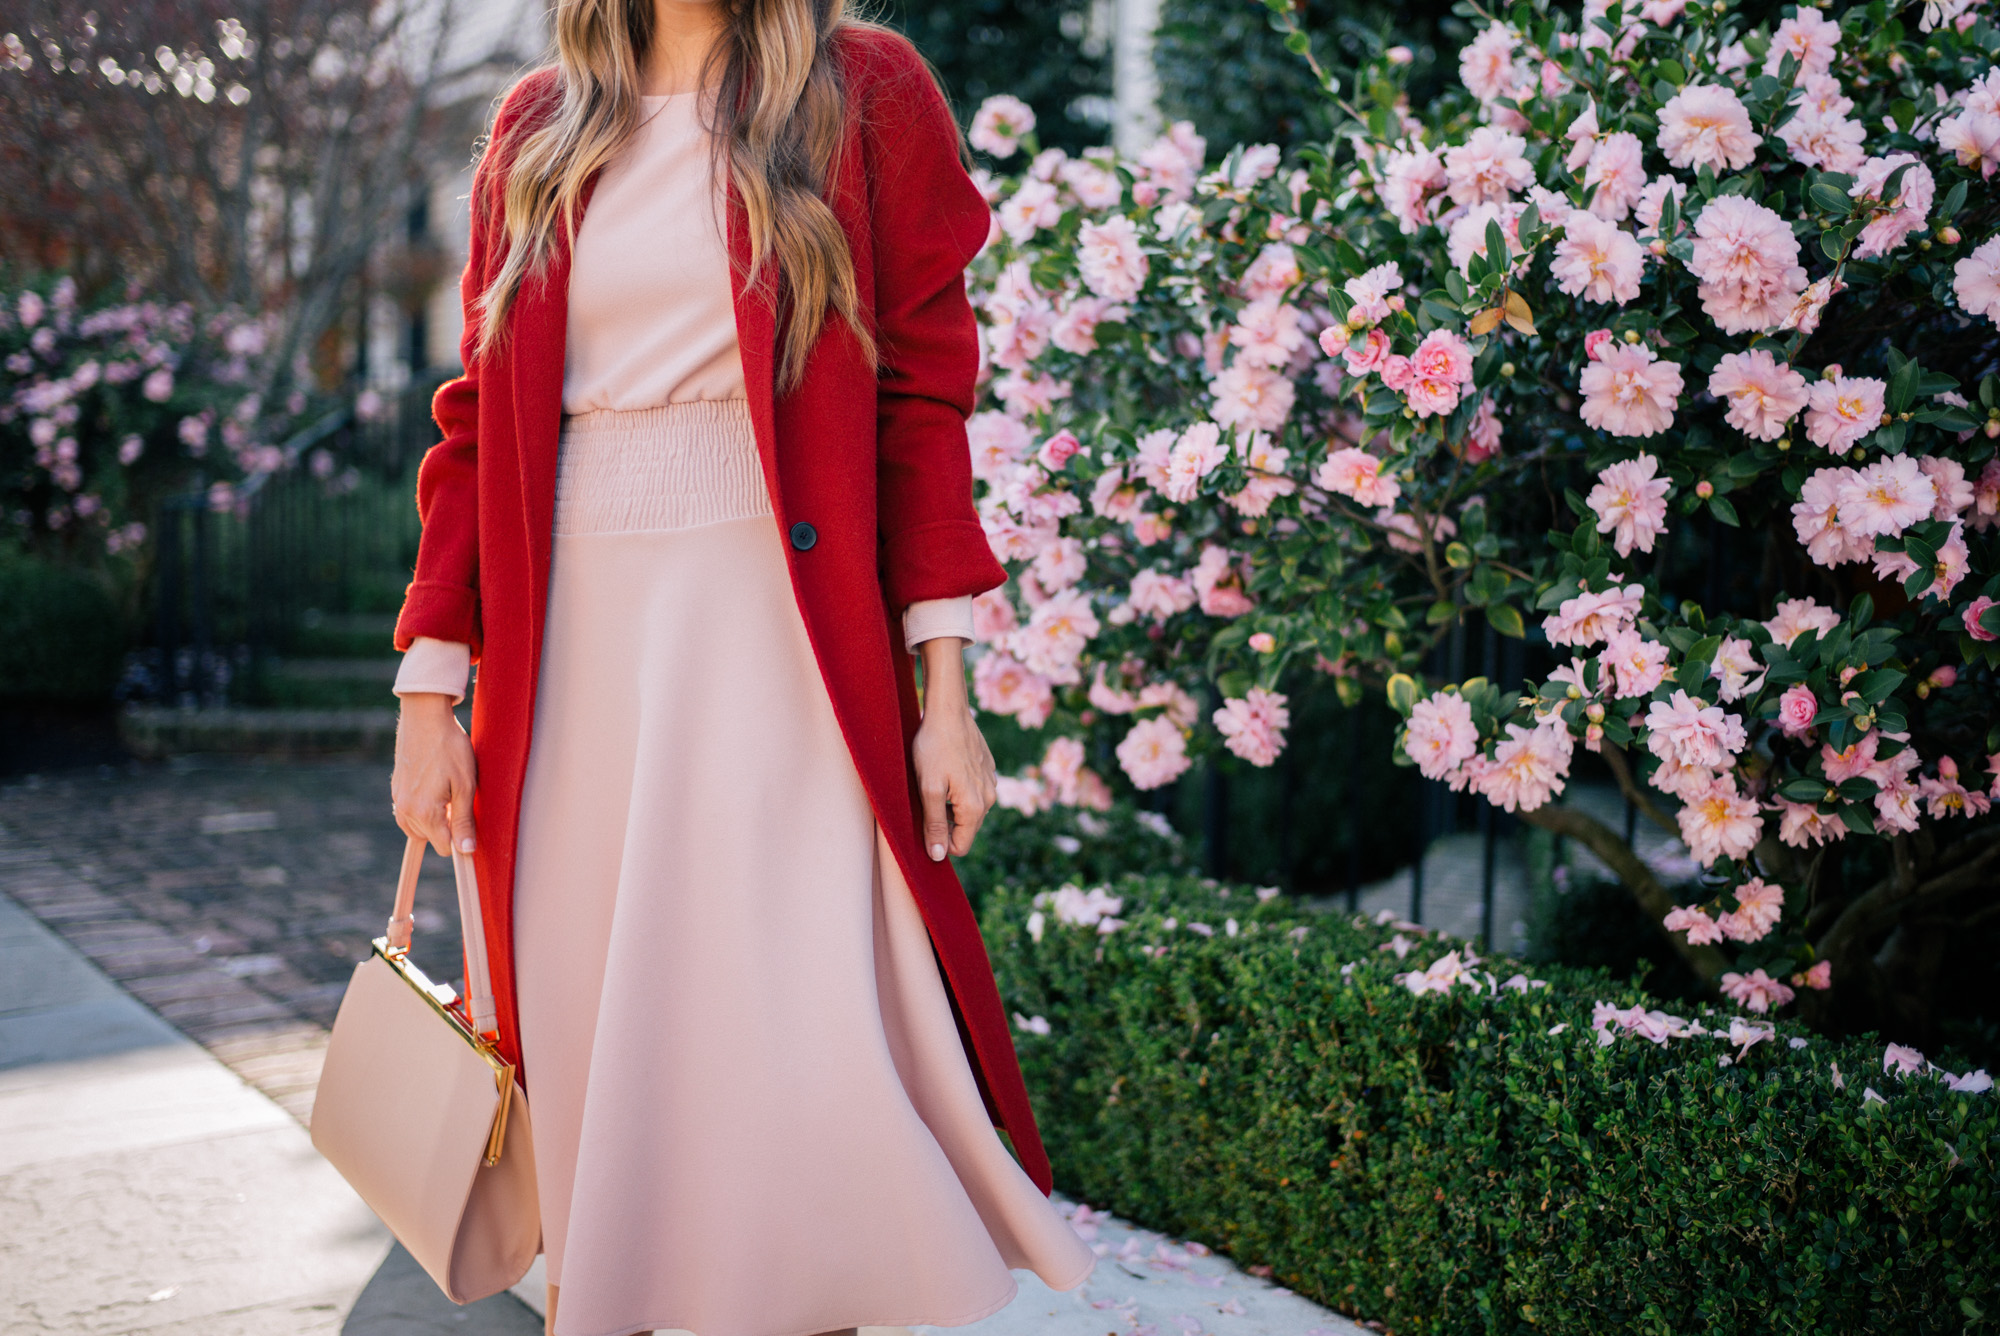 gmg-pink-dress-red-coat-1009325